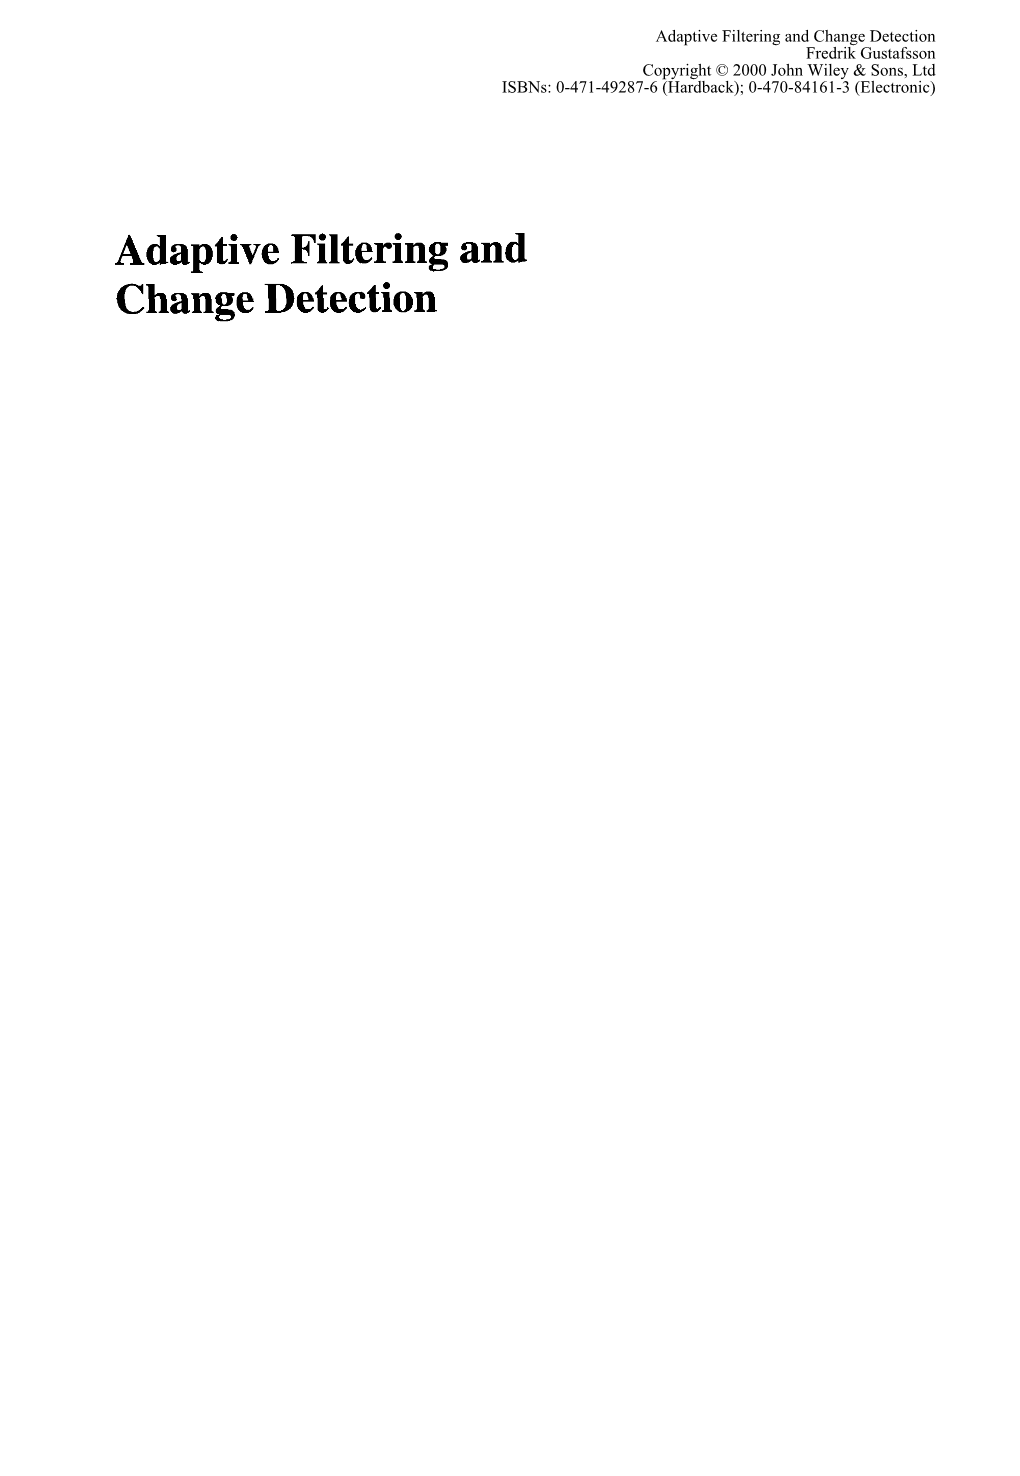 Adaptive Filtering and Change Detection Fredrik Gustafsson Copyright © 2000 John Wiley & Sons, Ltd Isbns: 0-471-49287-6 (Hardback); 0-470-84161-3 (Electronic)